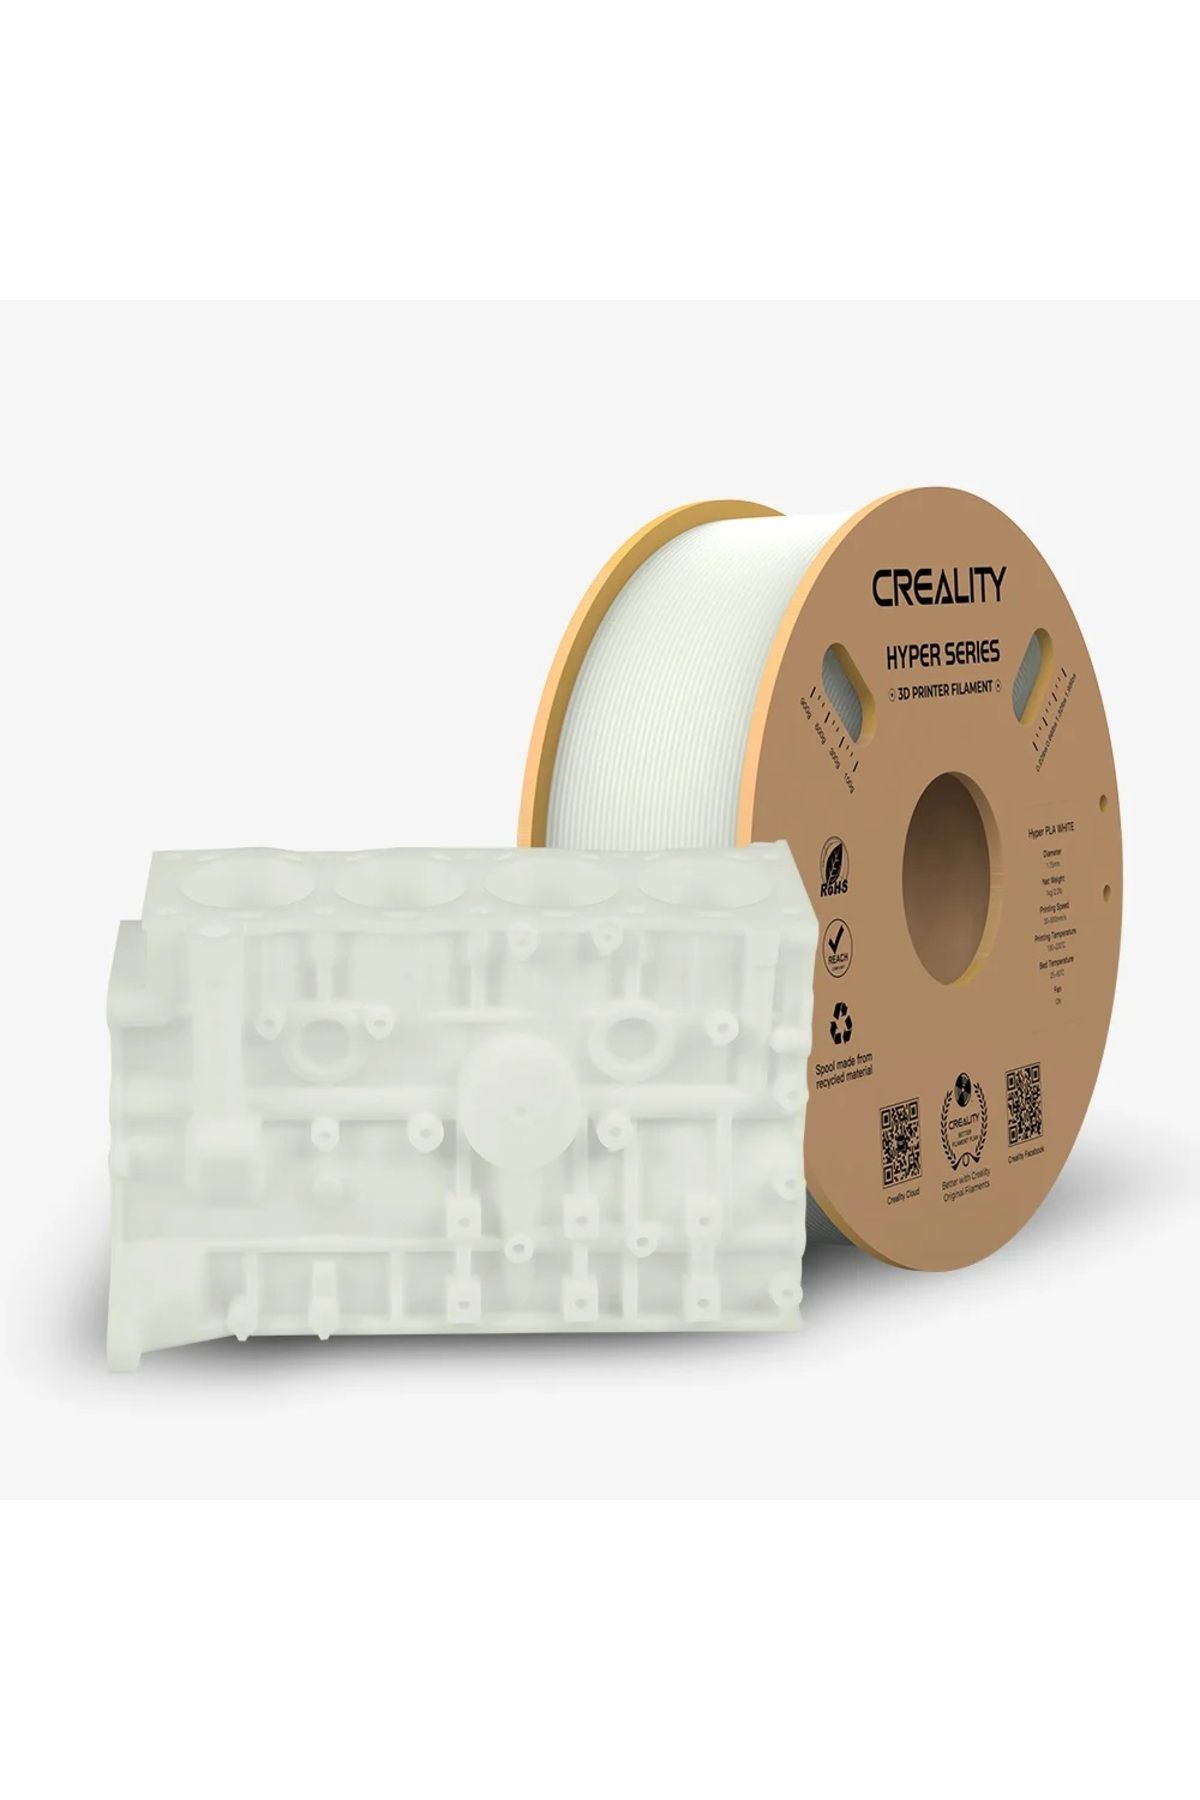 Creality Hyper Pla Filament Beyaz 1.75mm 1kg Fiyatı, Yorumları